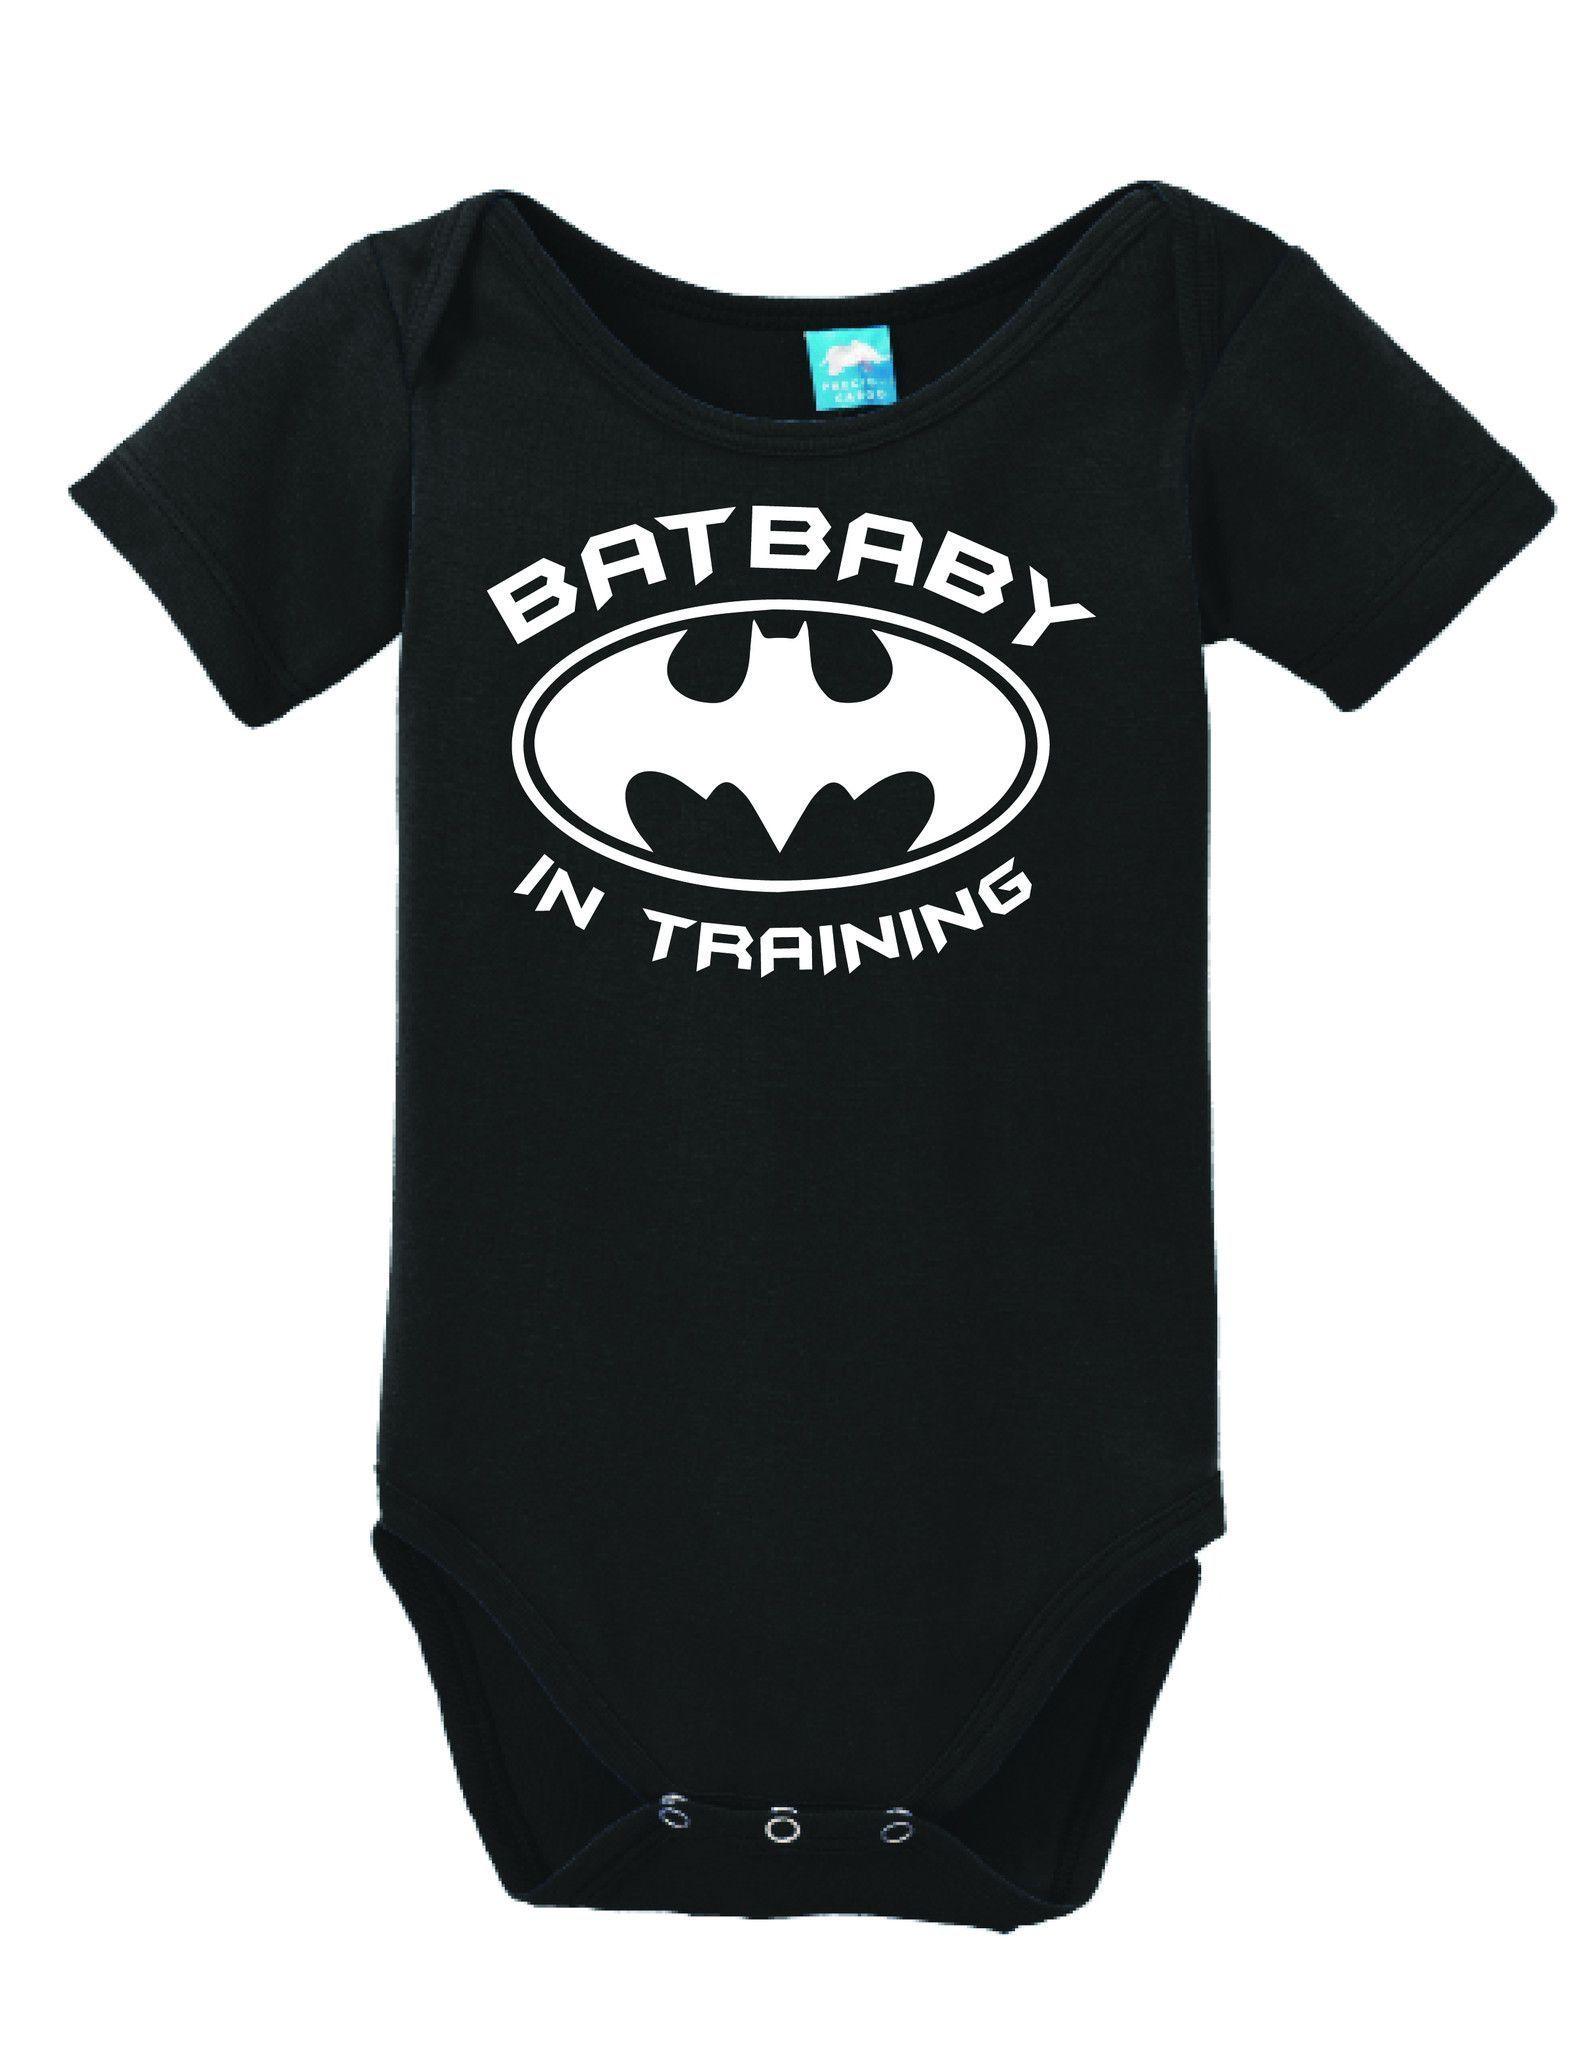 Batbaby Logo - Batbaby In Training | Funny! | Celebrity babies, Baby batman, Baby